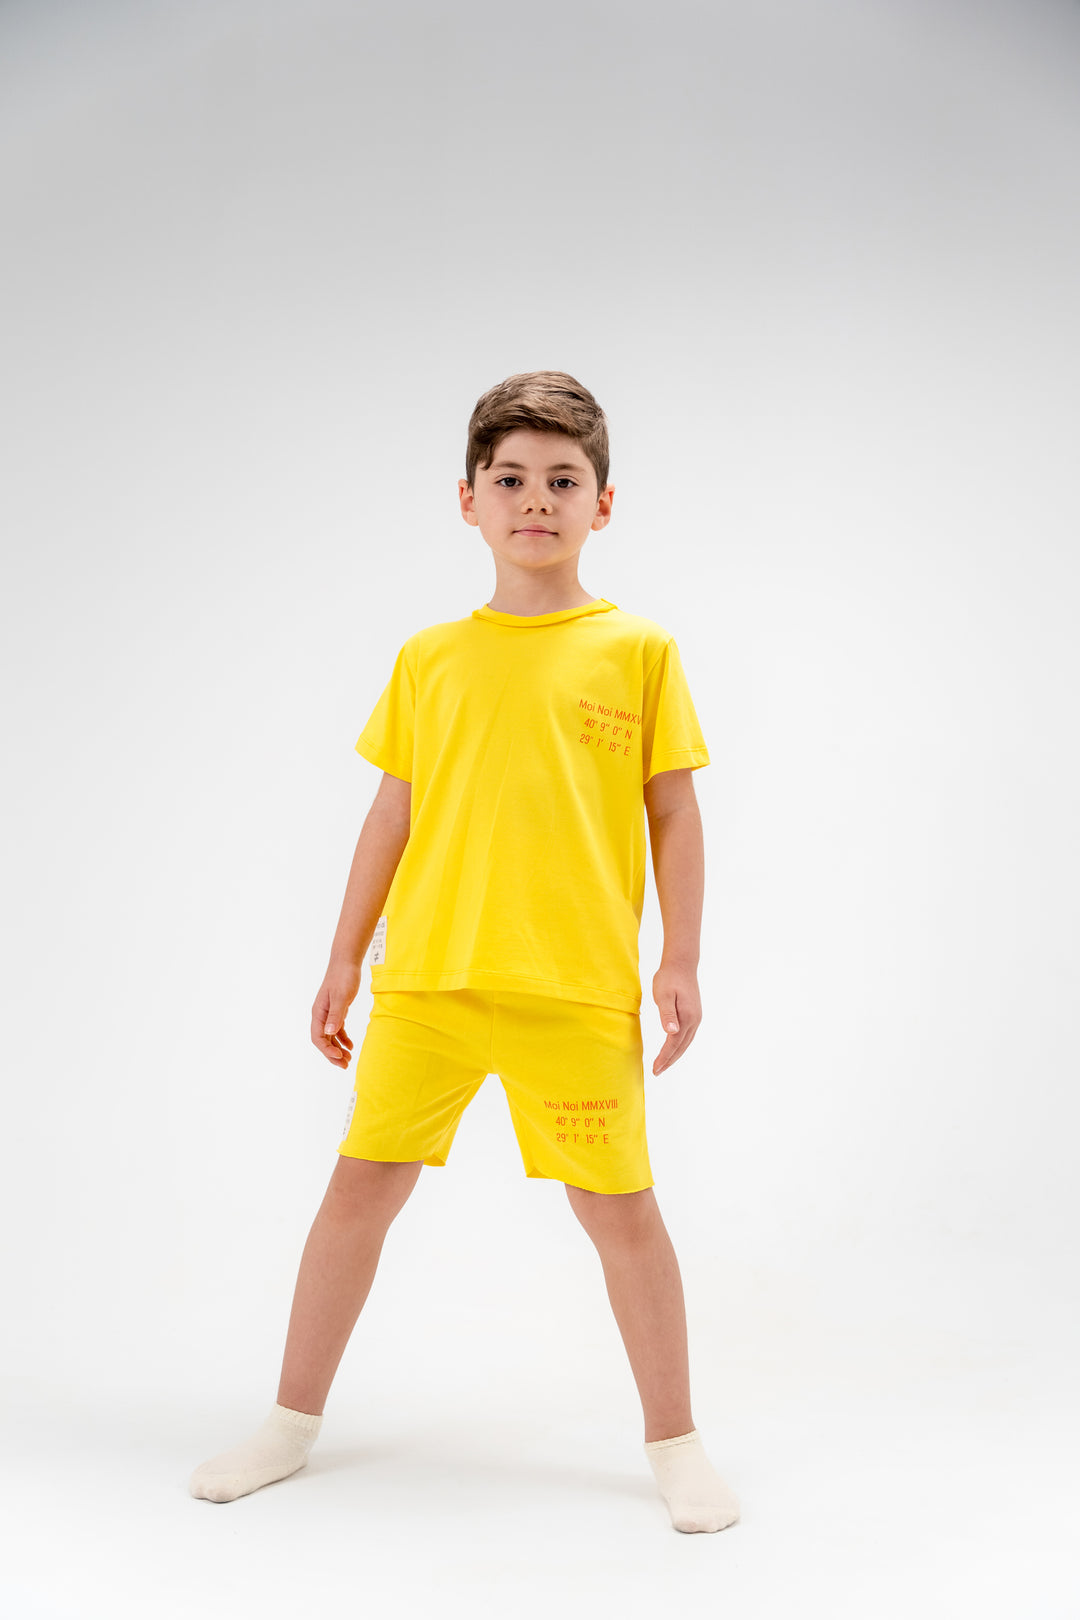 kids-atelier-moi-noi-gender-neutral-kid-baby-girl-boy-yellow-logo-summer-outfit-mn5167-yellow